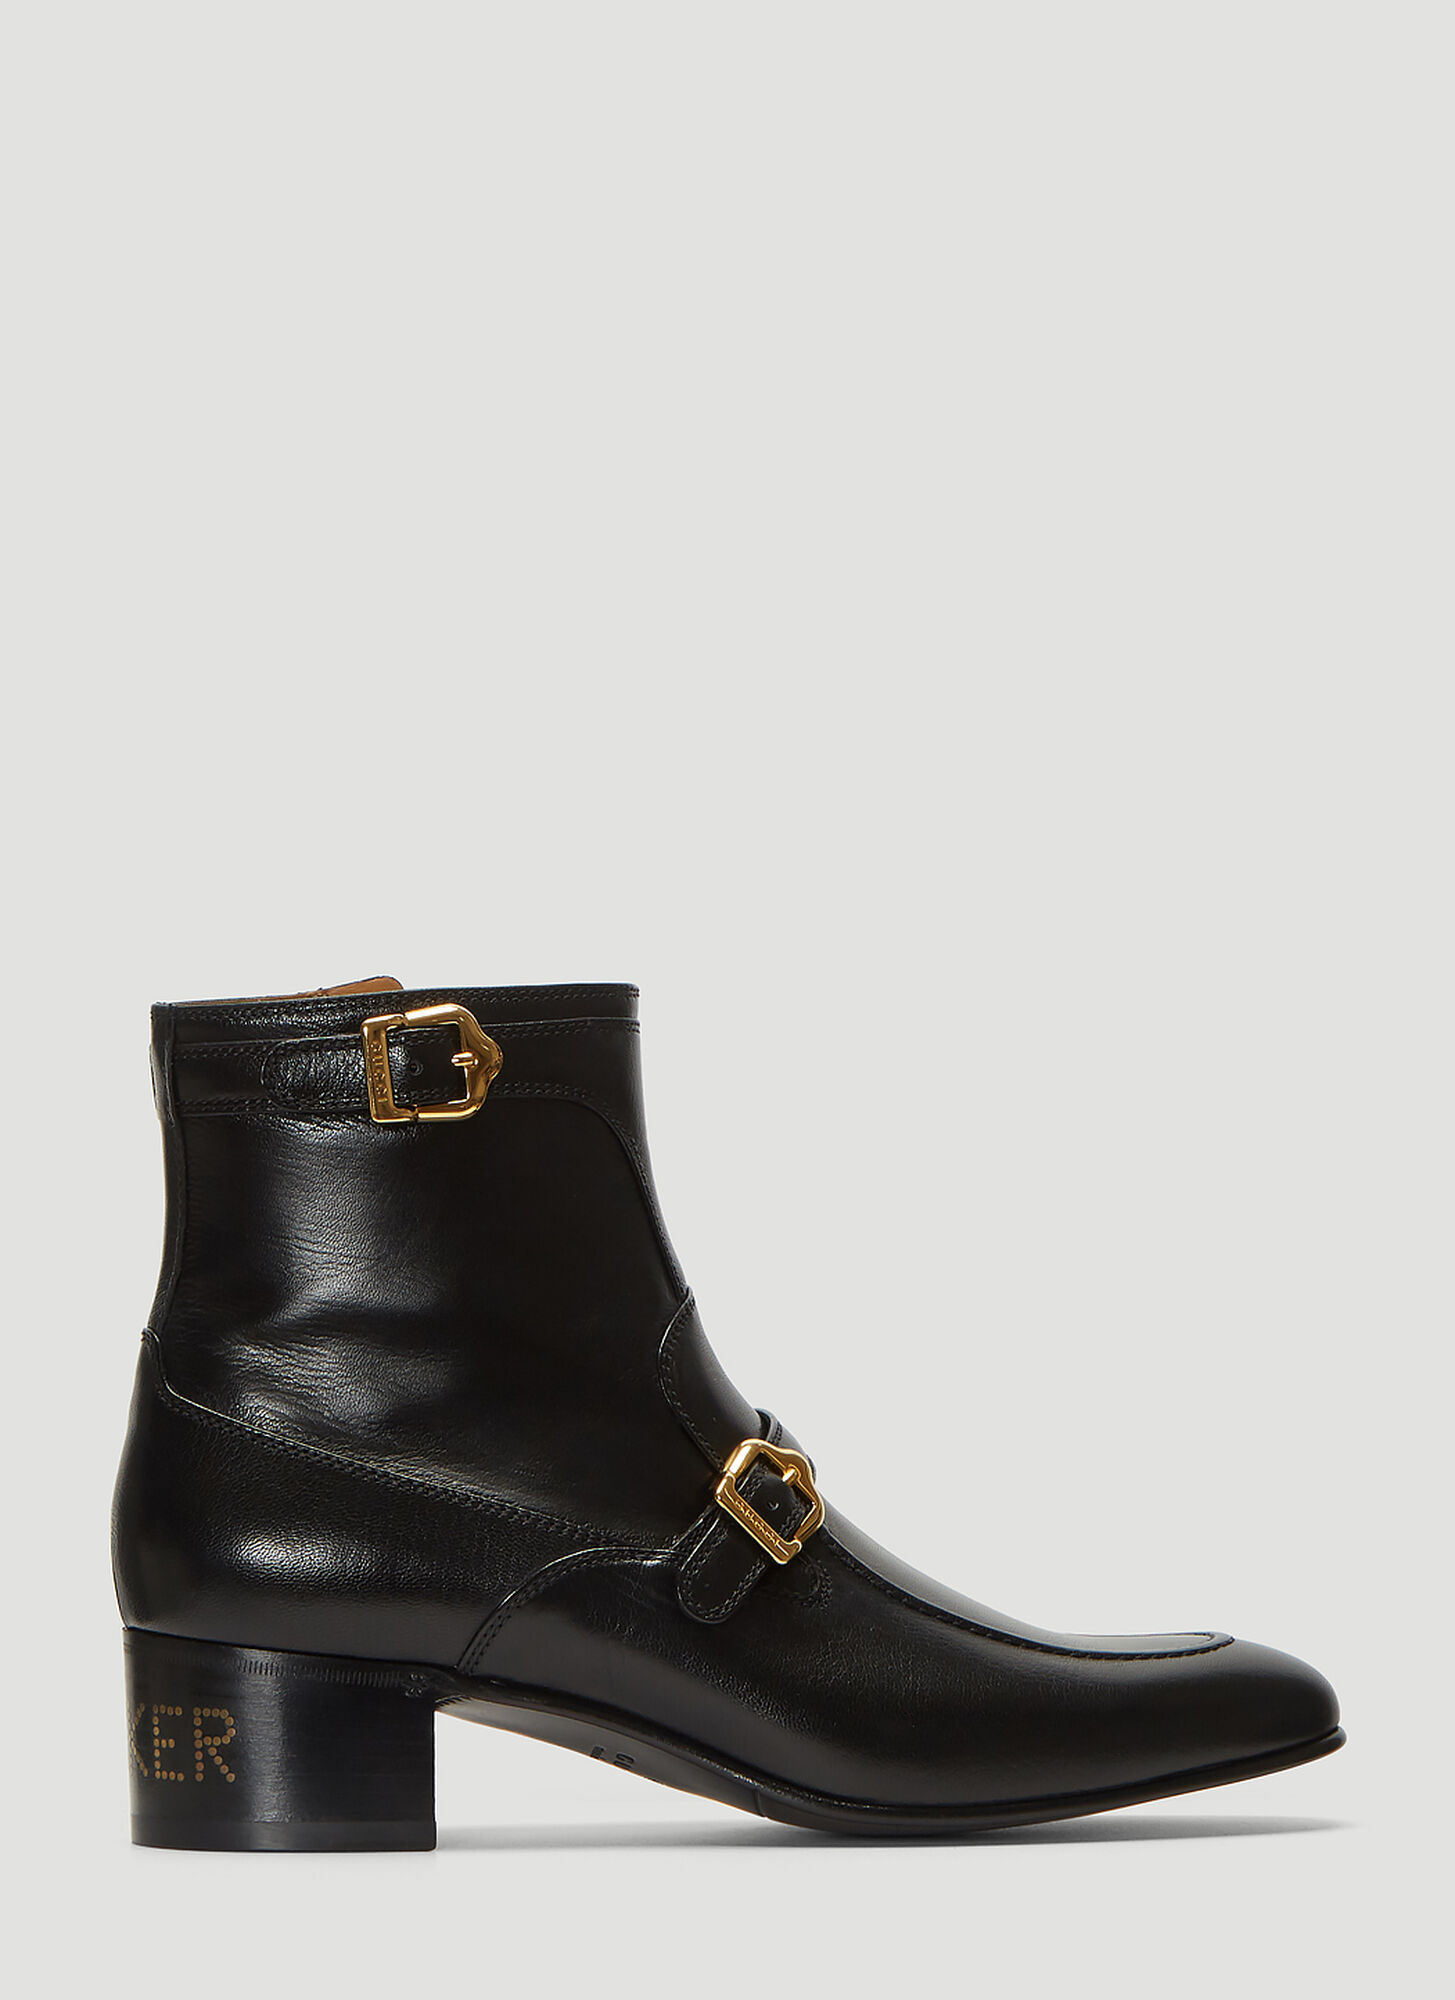 Gucci Sucker Leather Boots in Black size UK – 08 | The Fashionisto